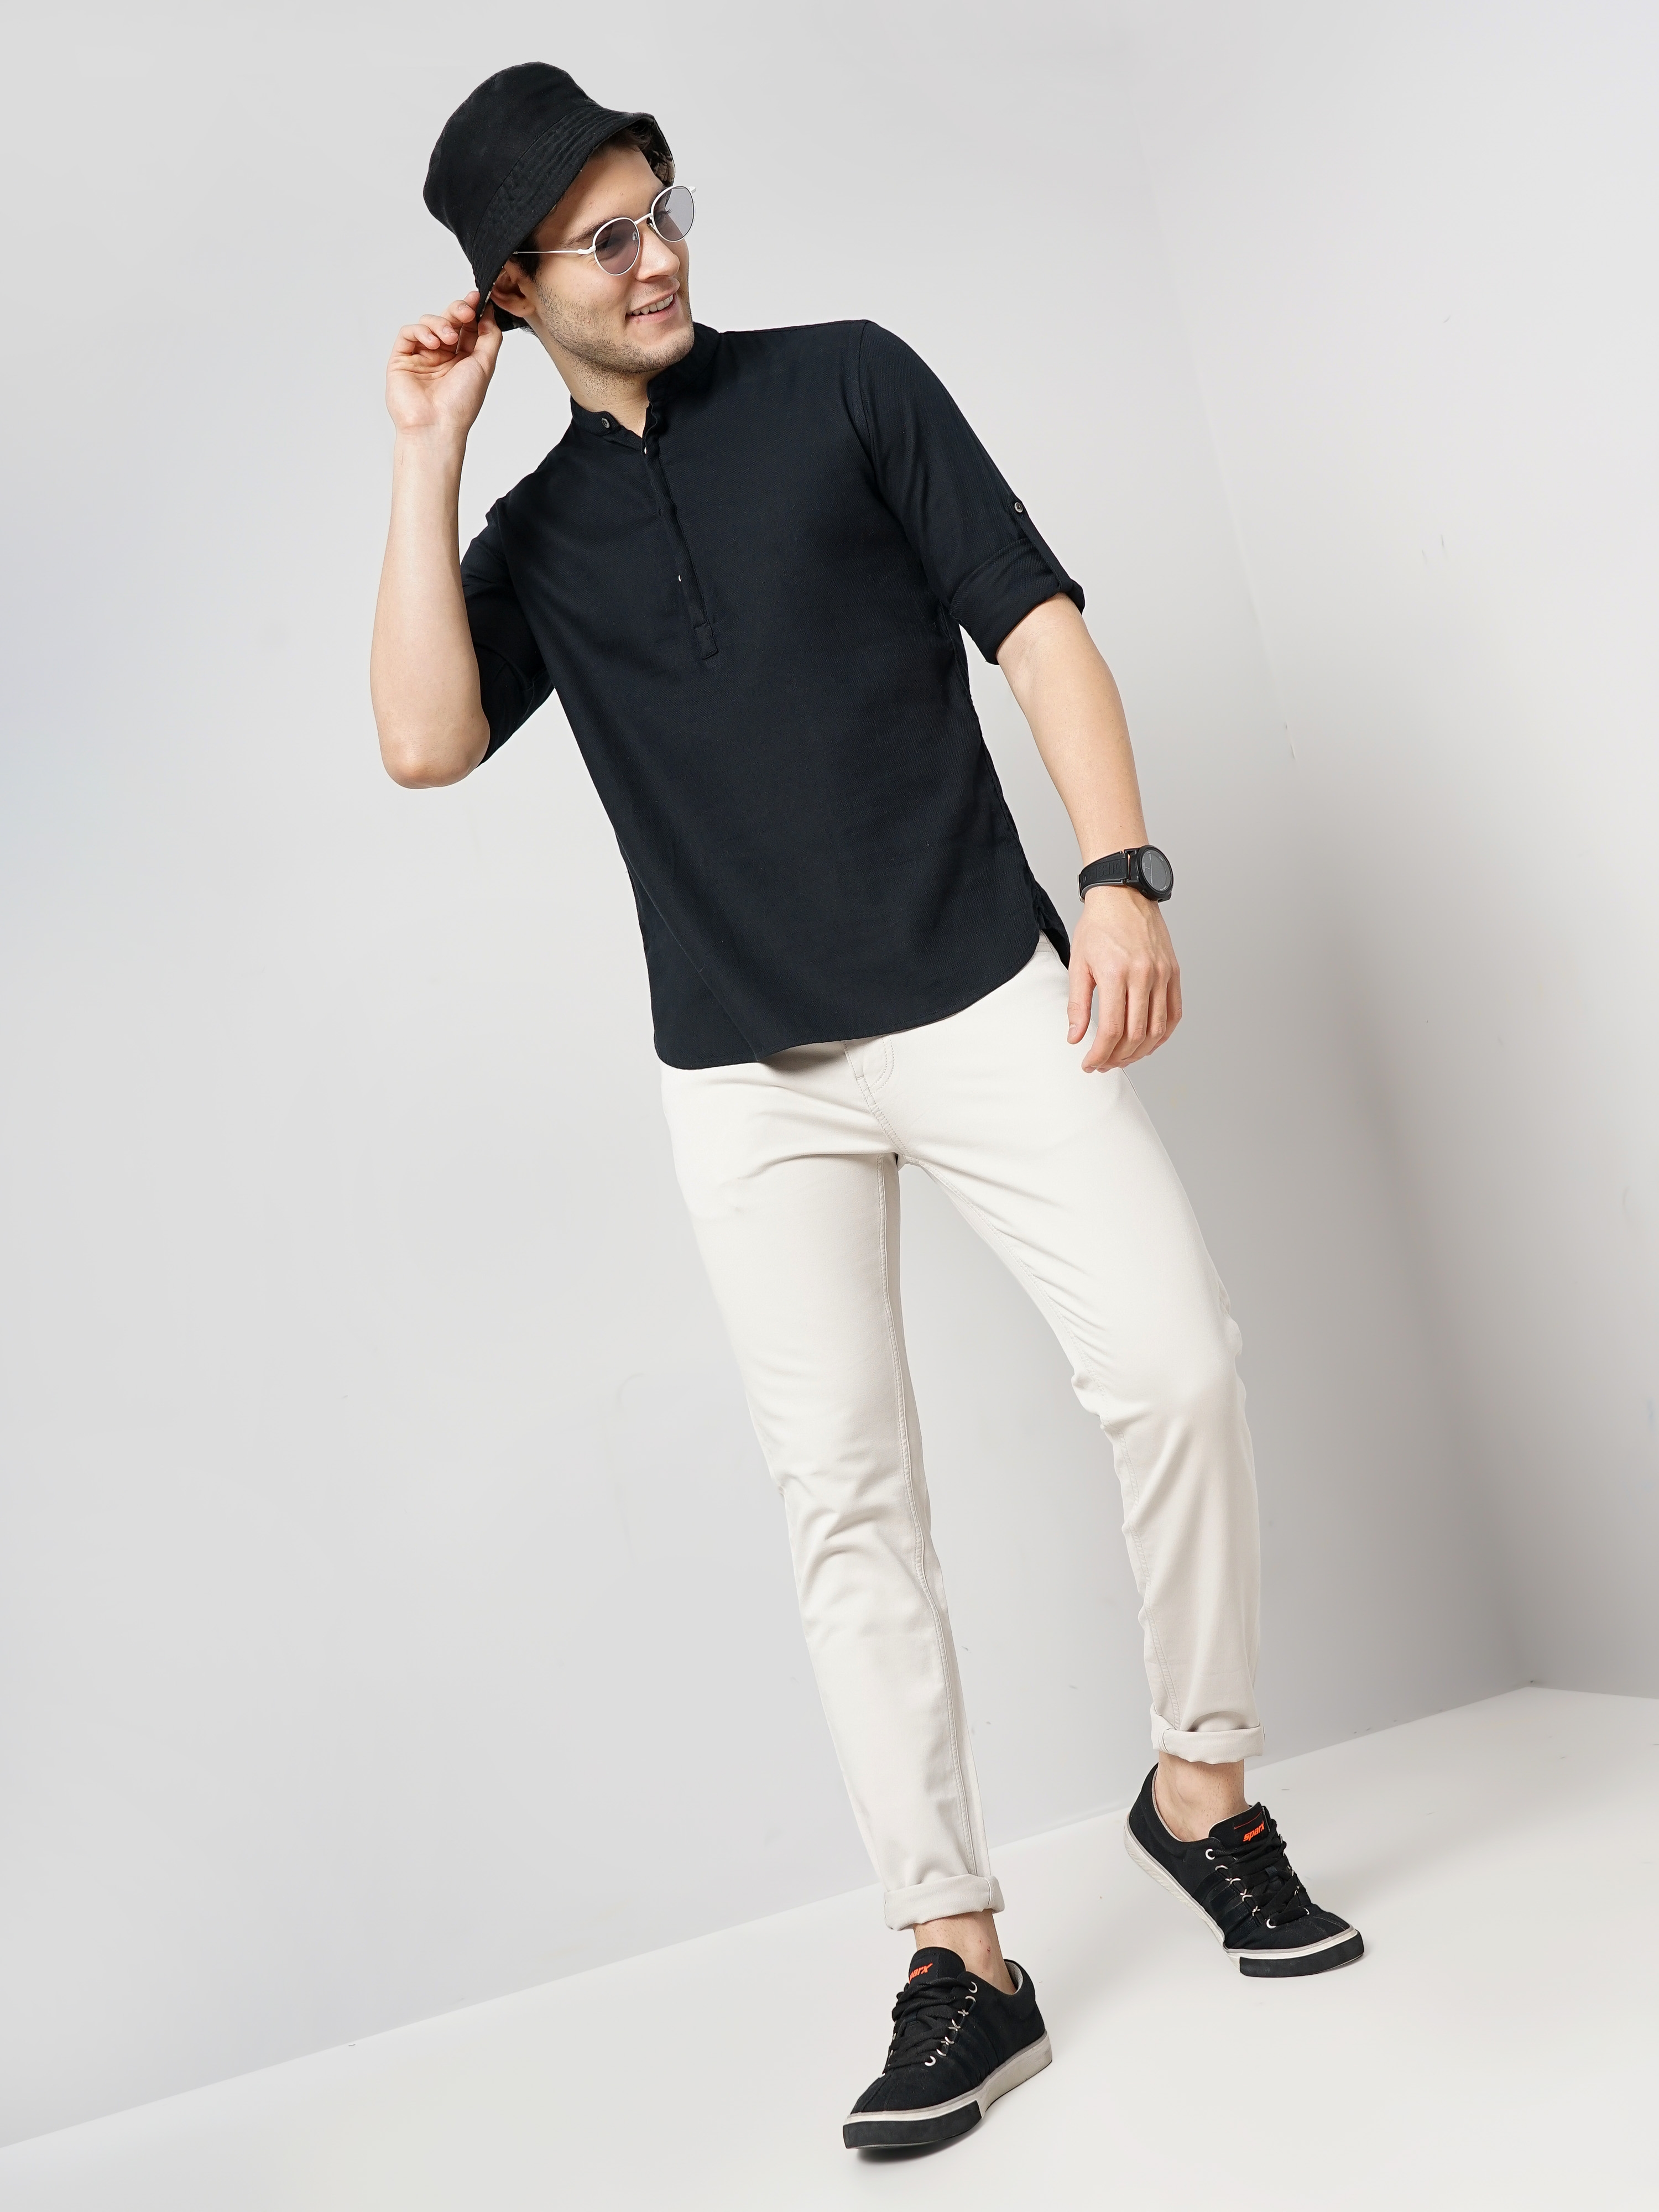 Celio Men Black Solid Regular Fit Cotton Contemporary Shirt